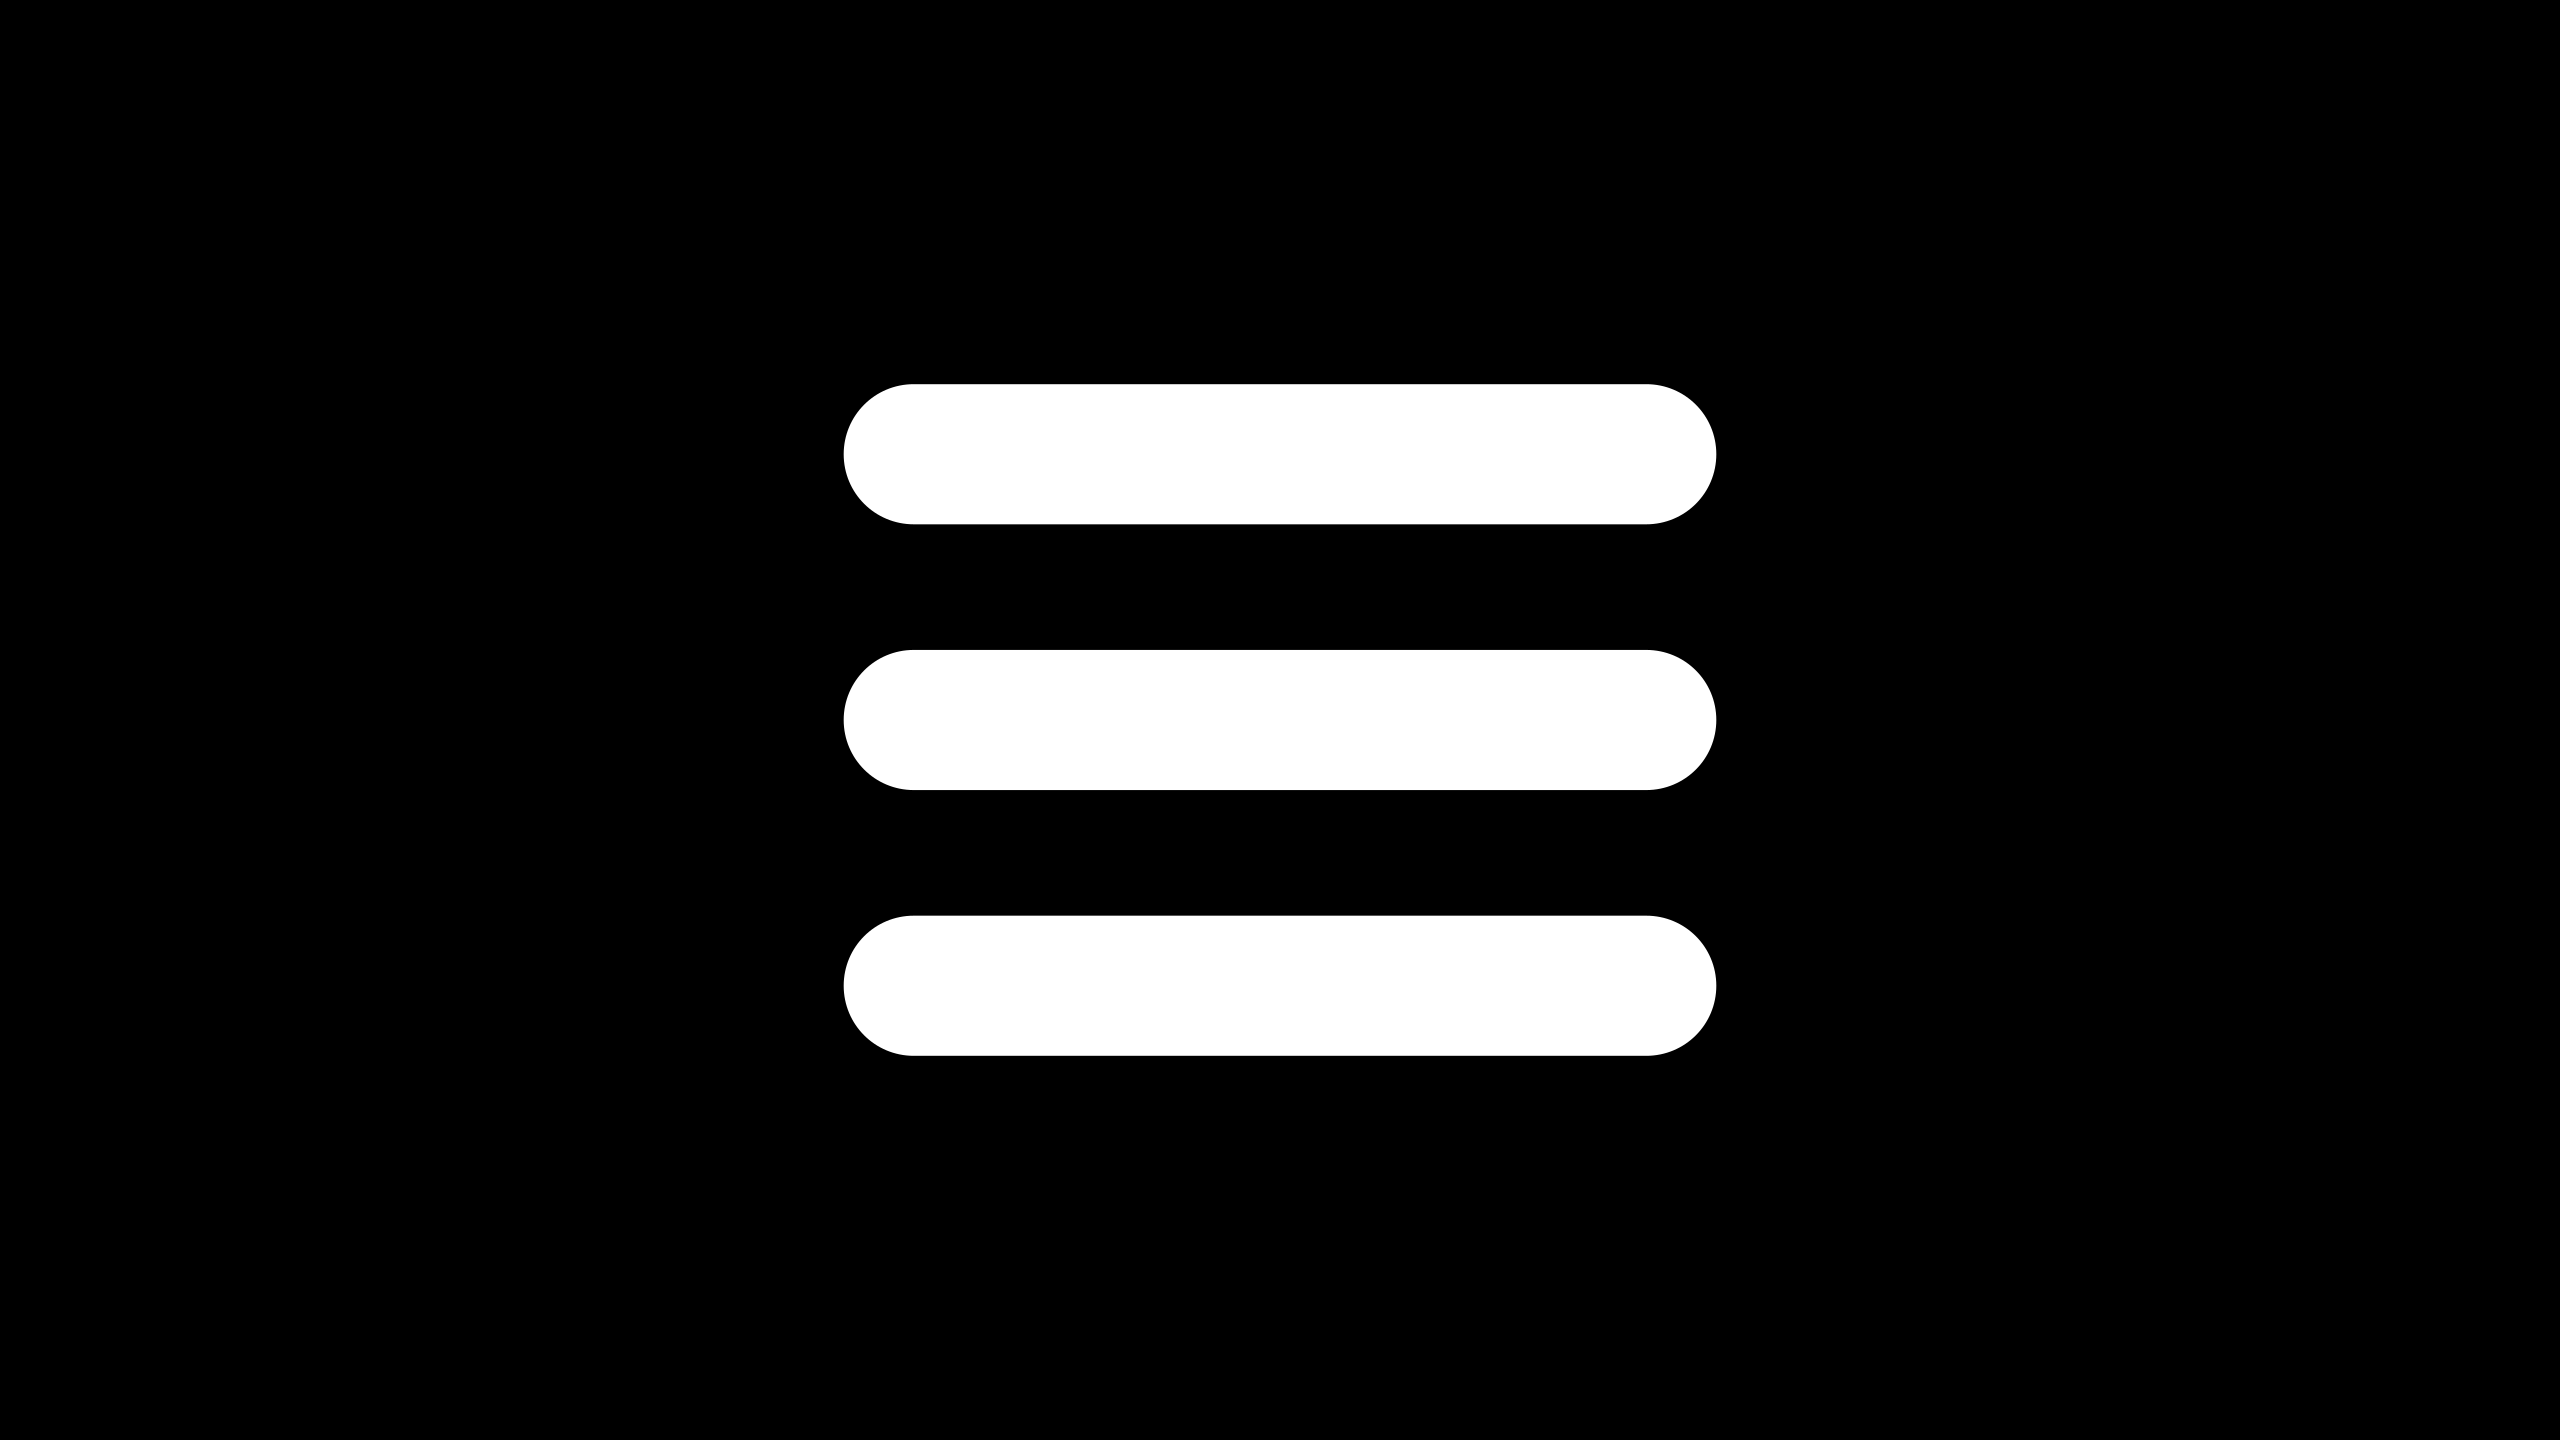 Animated hamburger menu icon